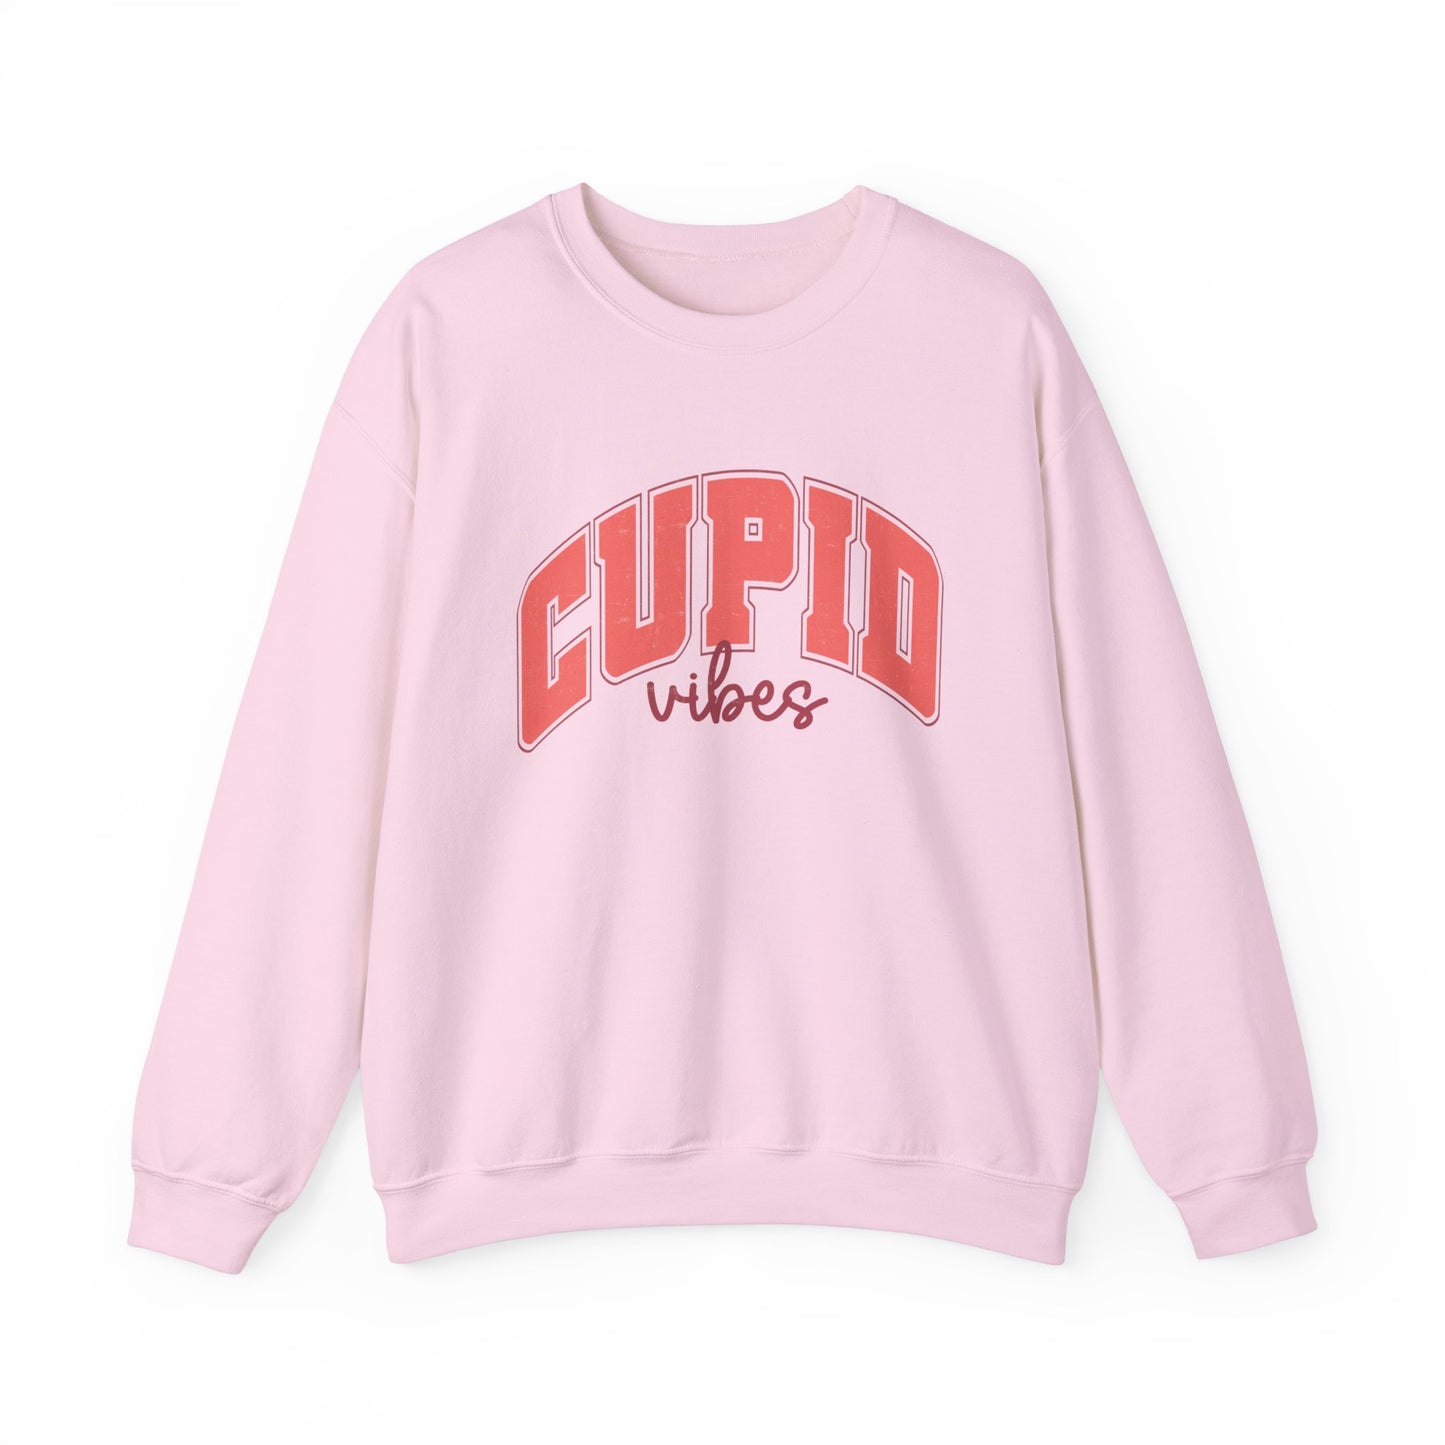 Cupid Vibes Valentine's Women's Sweatshirt